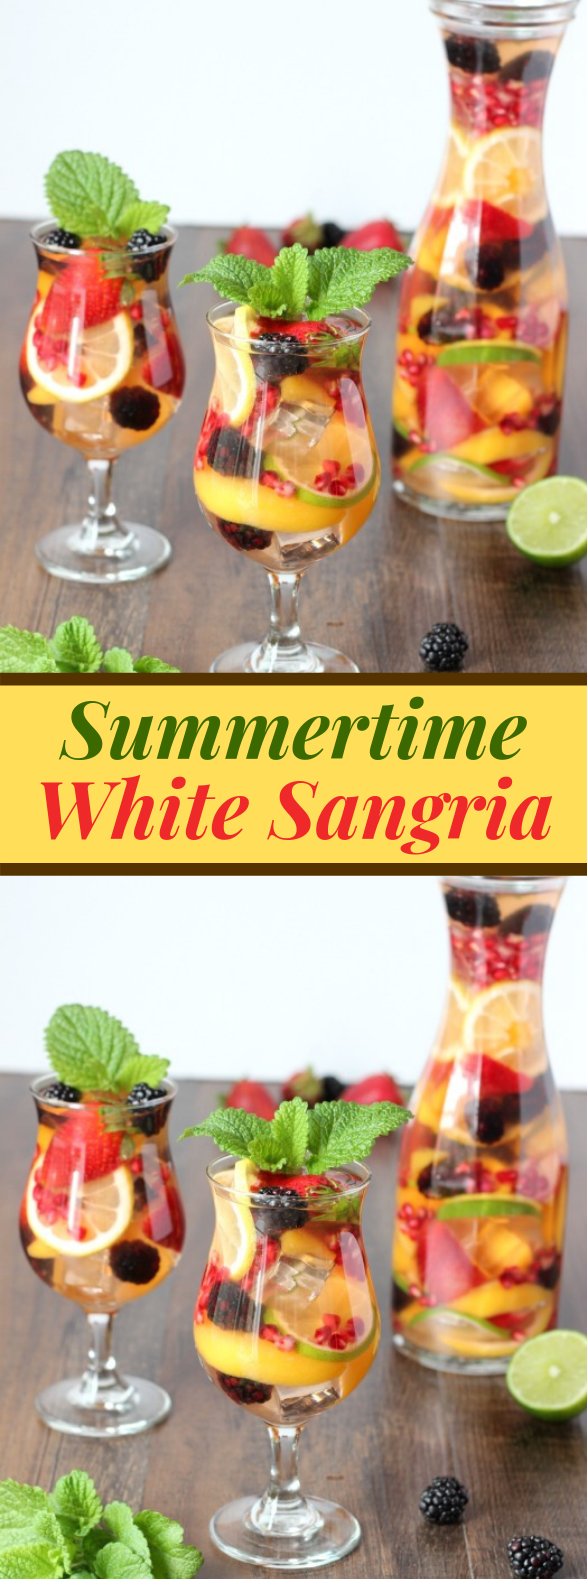 Summertime White Sangria #drink #summerdrink